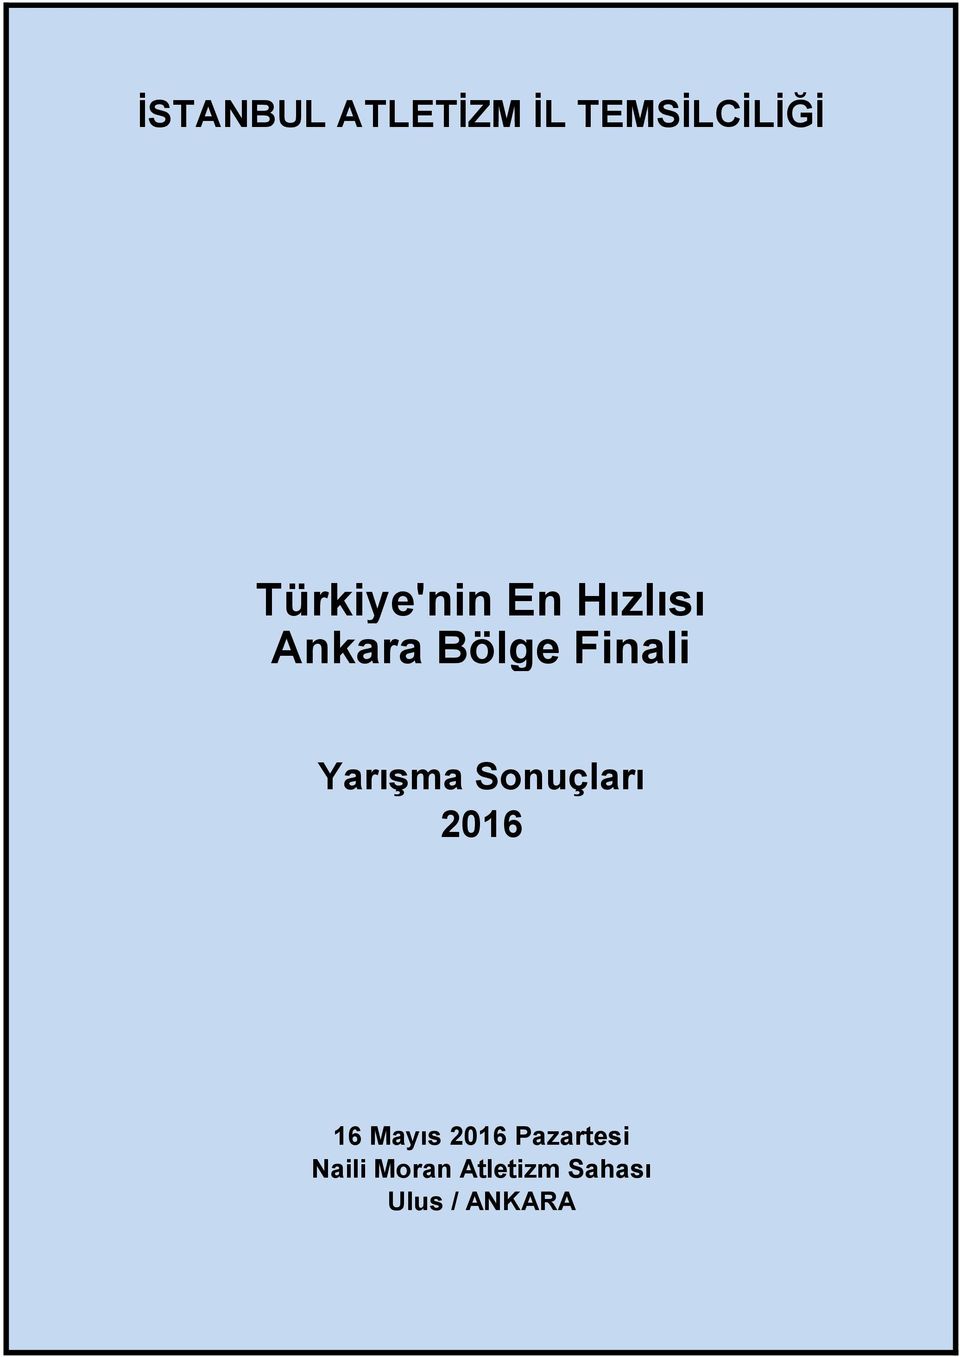 Hızlısı Ankara Bölge Finali